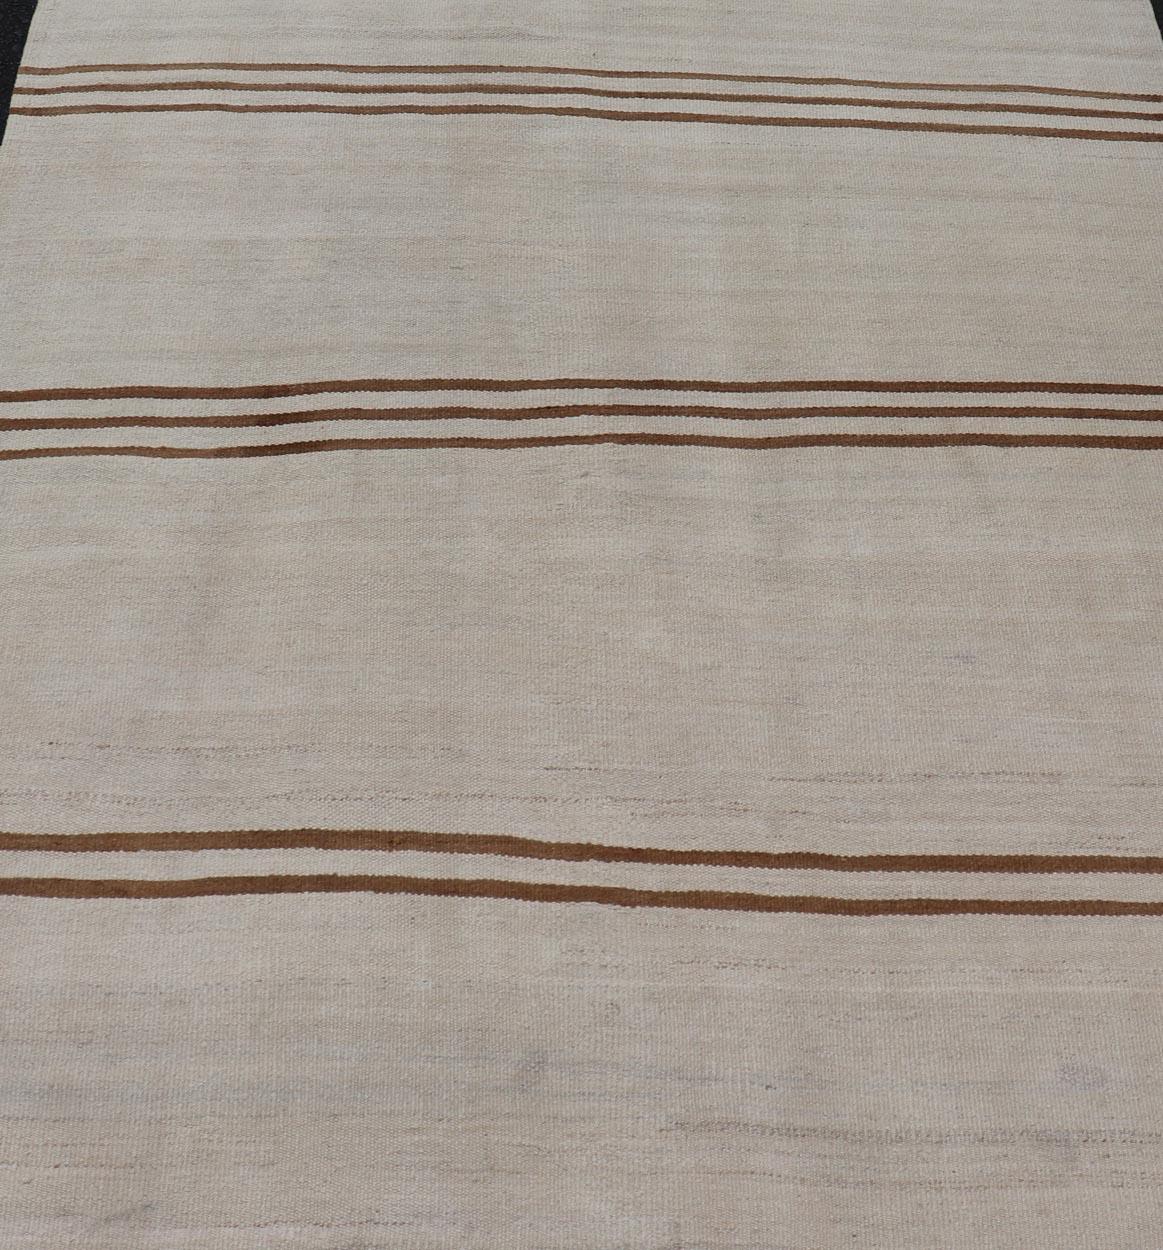 Flat-Weave Kilim Vintage Rug Turkey with Horizontal Stripes in Ivory & Brown. Keivan Woven Arts /  rug EN-13711, country of origin / type: Turkey / Kilim, circa 1950
Measures: 4'10 x 5'9 
This vintage flat-woven Kilim features a minimalist design